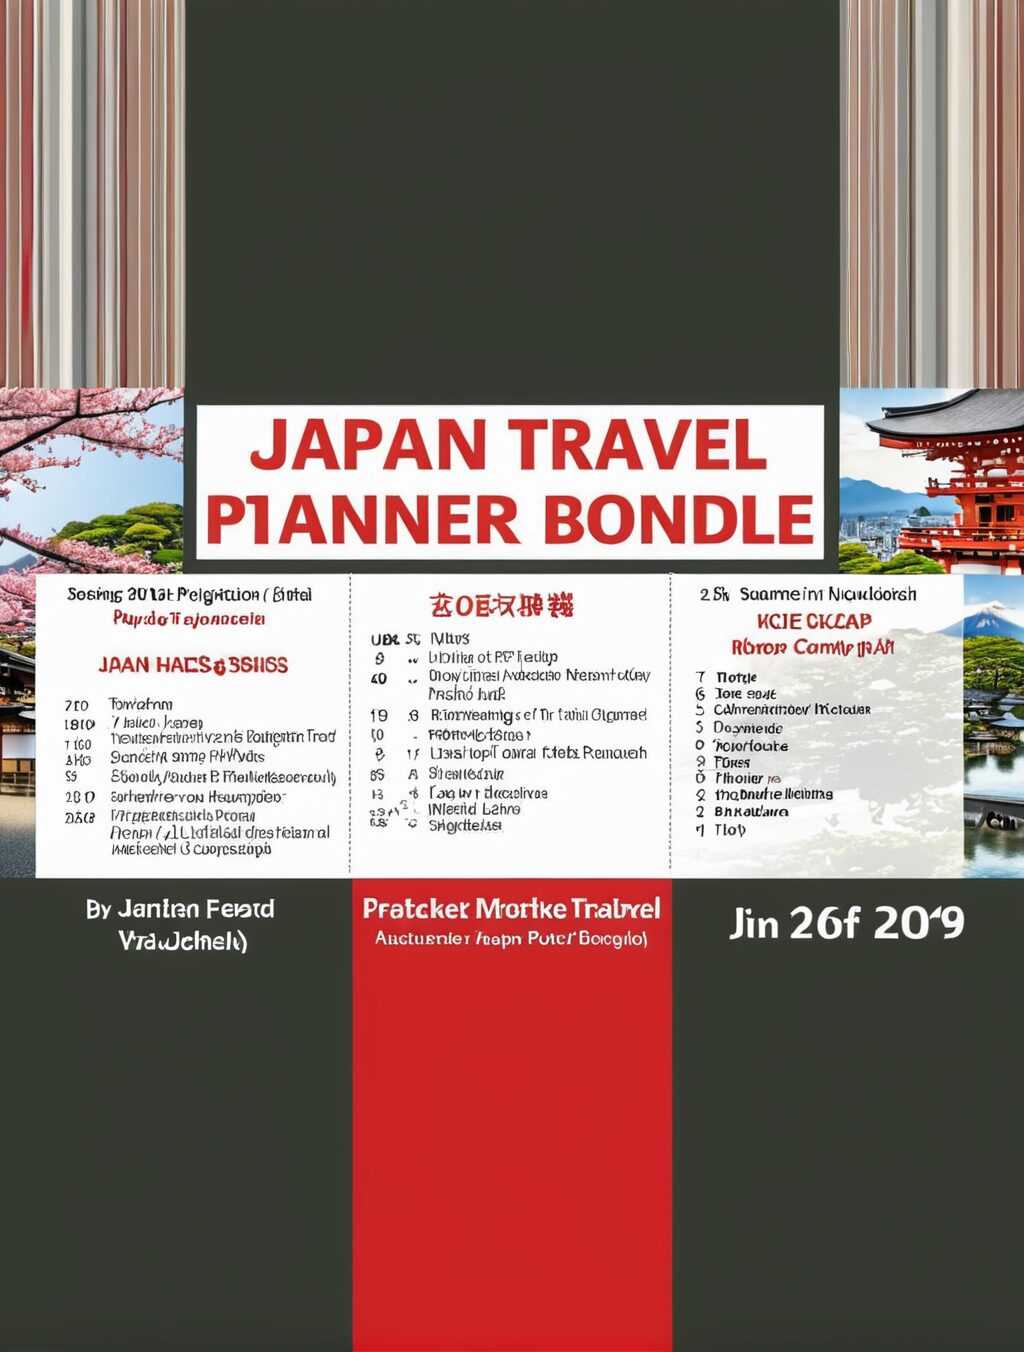 japan travel book pdf